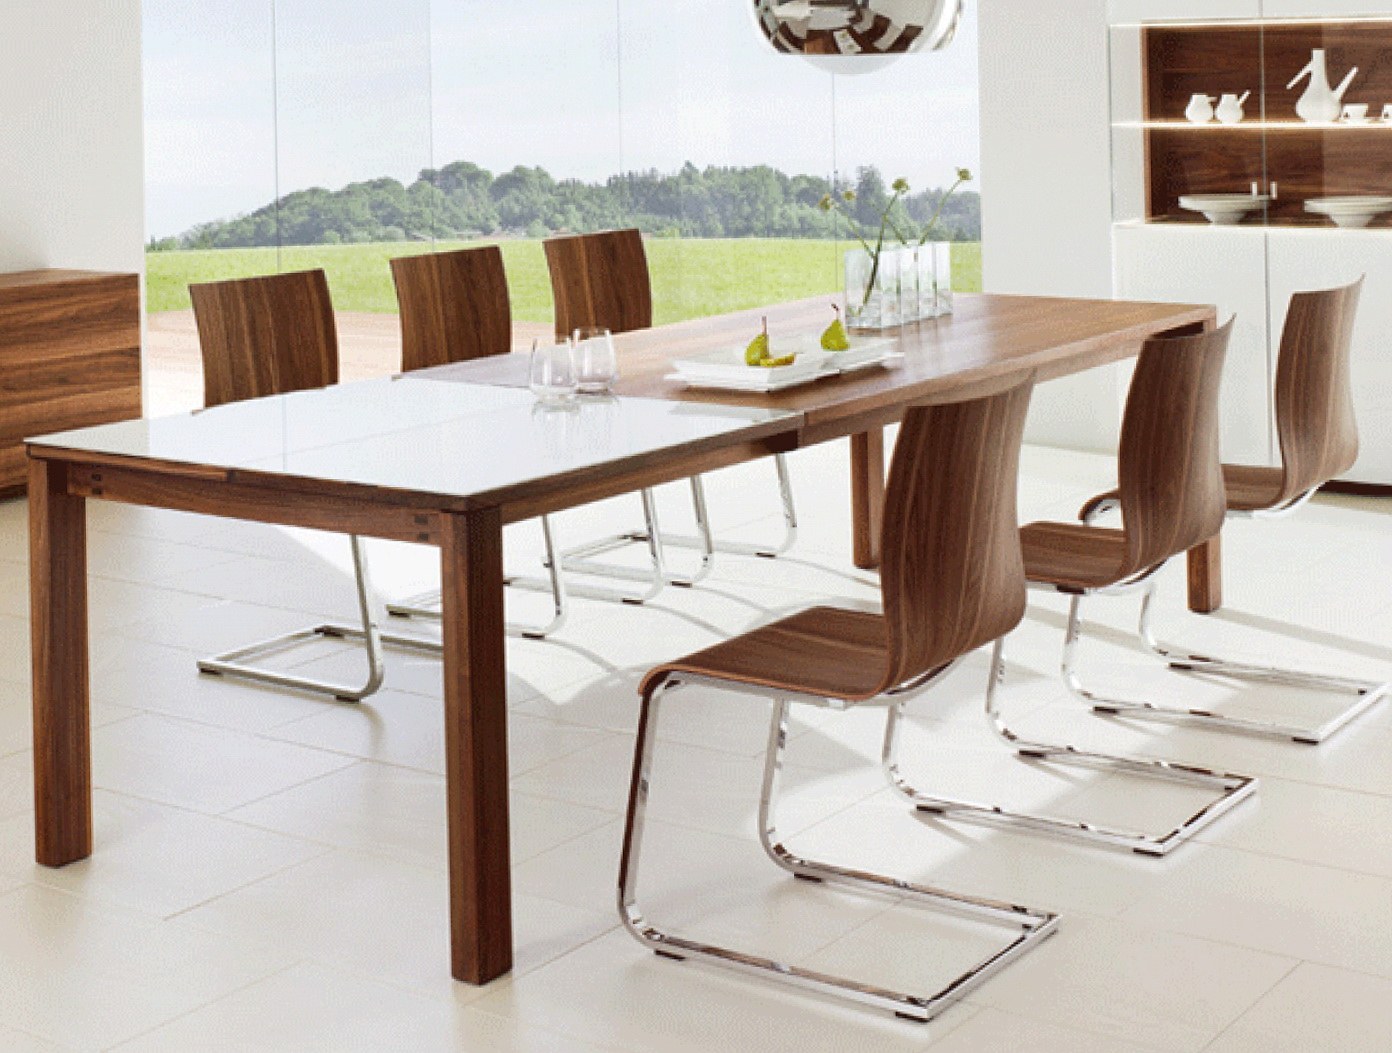 Обеденные столы краснодар. Стол Модерн Экомебель. Современный обеденный стол. Большие обеденные столы современные. Модные кухонные столы.